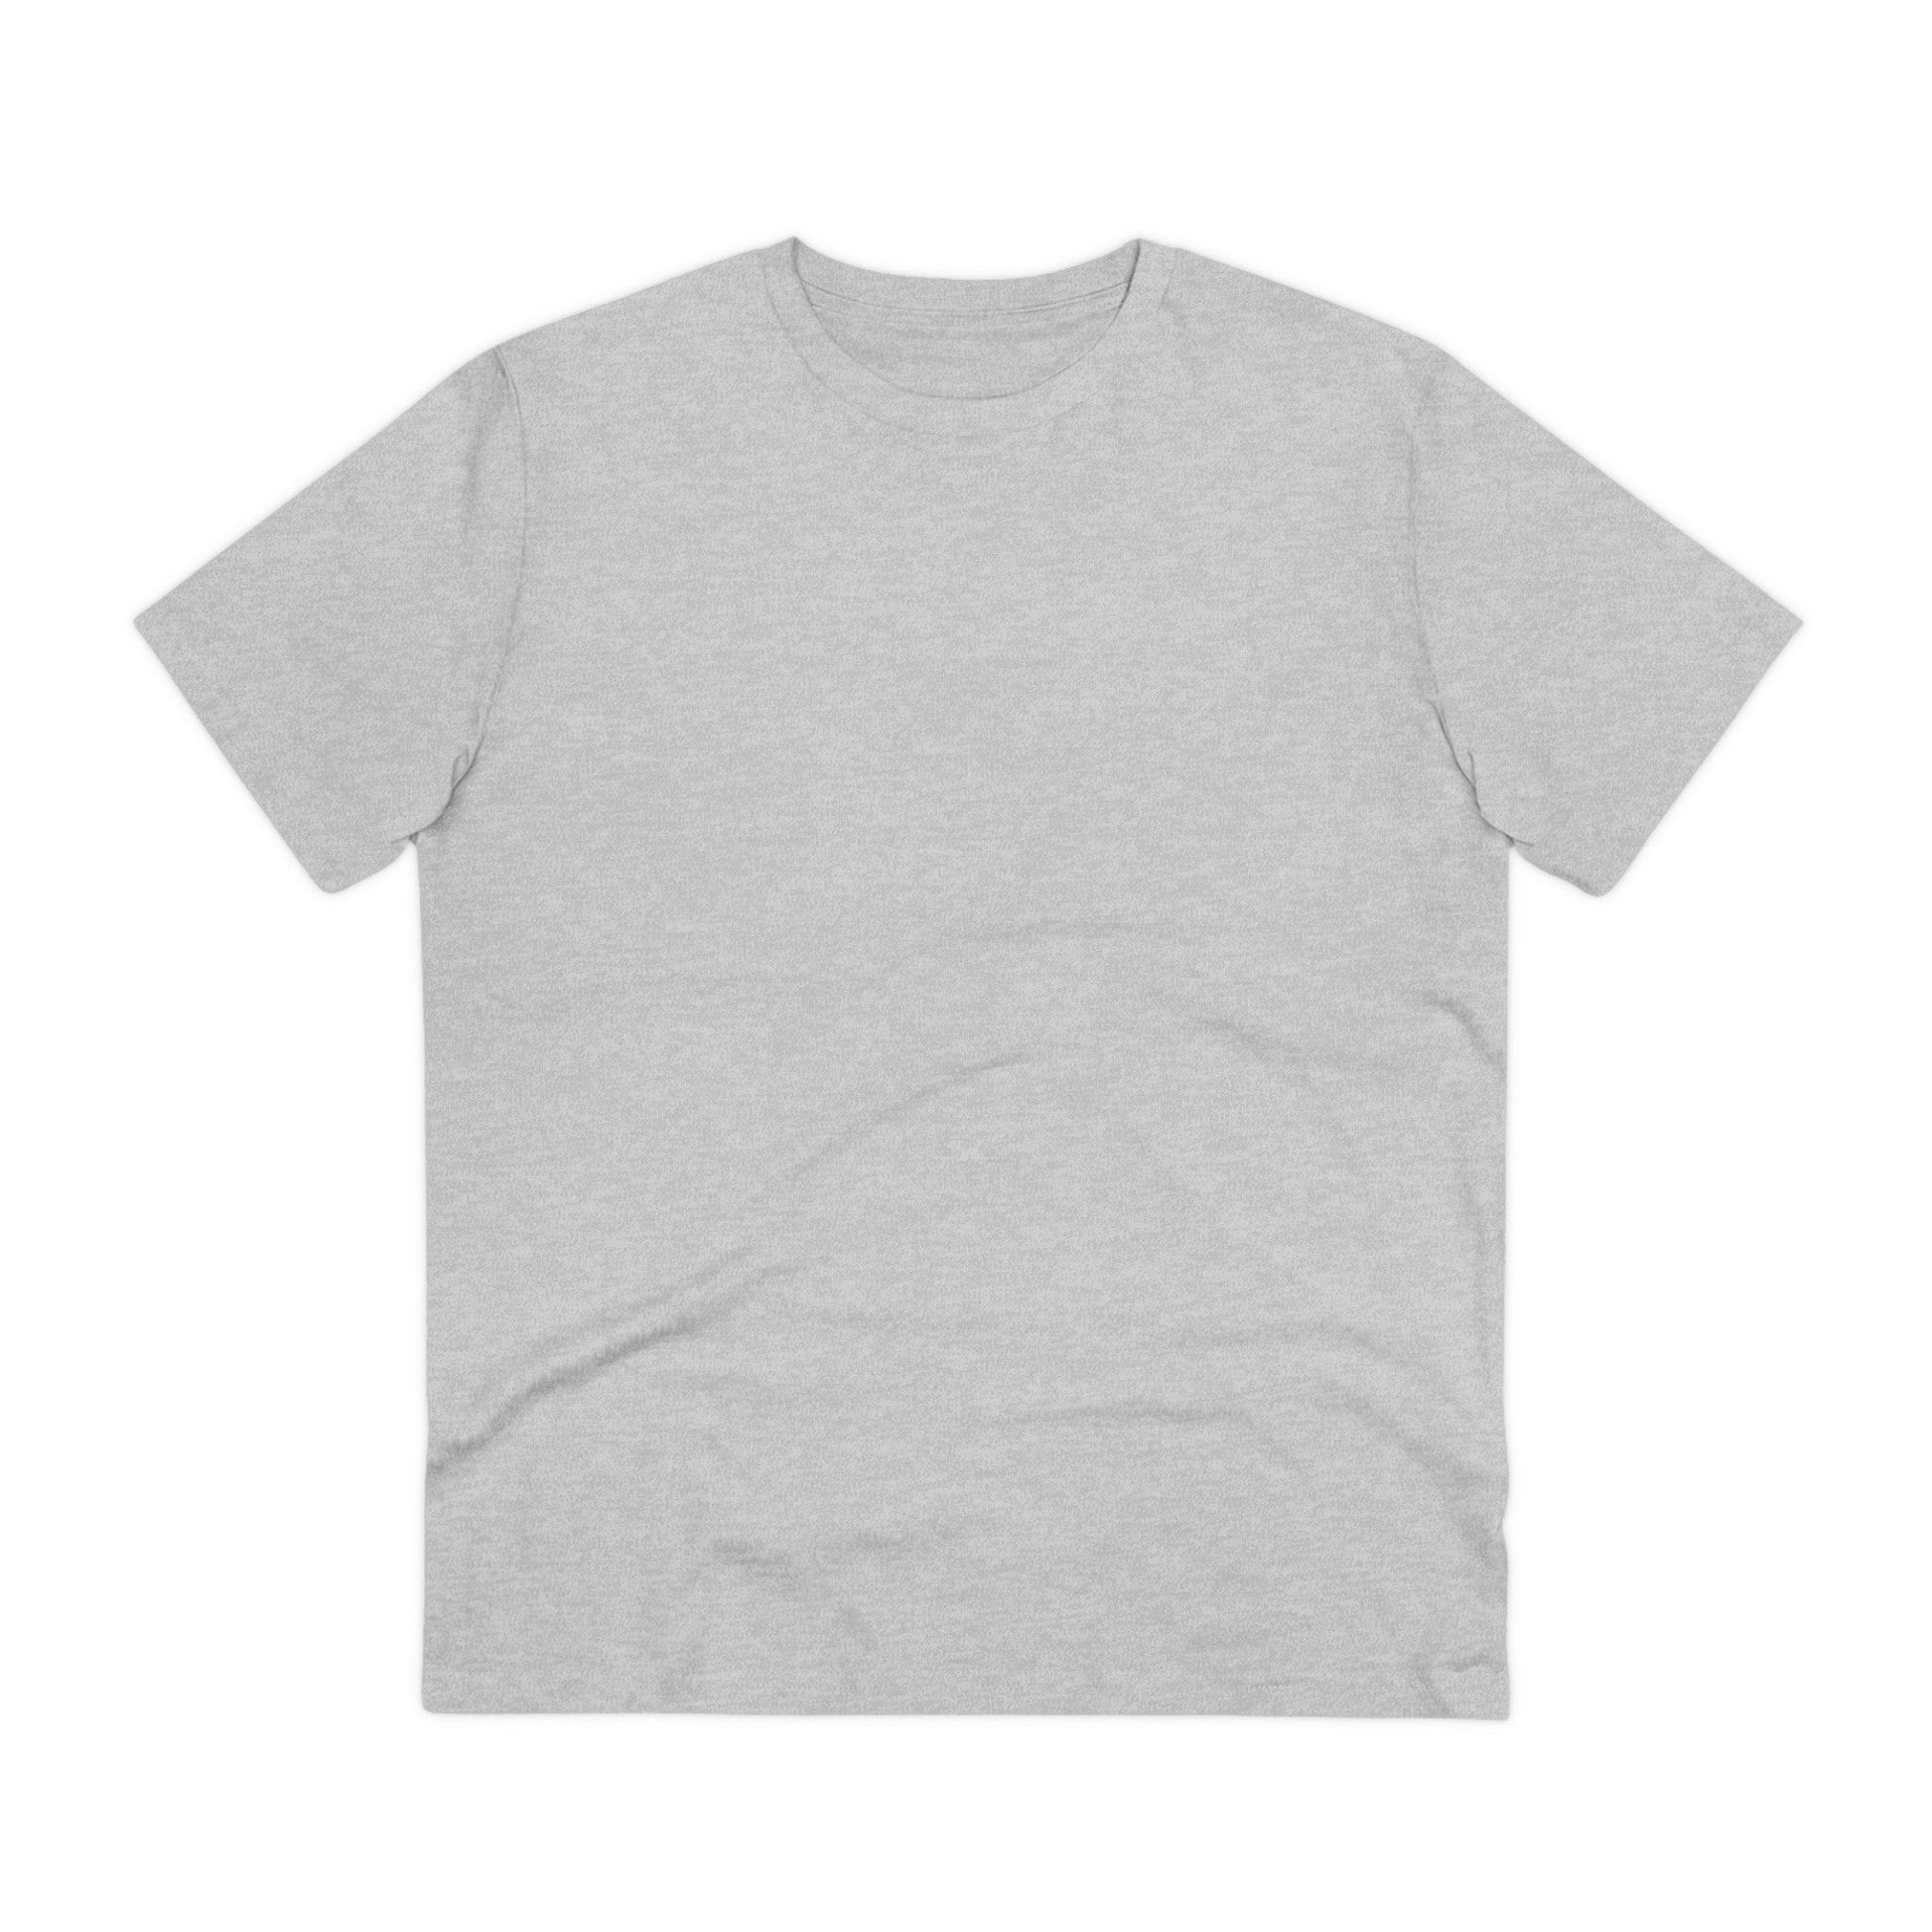 Printify T-Shirt Limitations Self-Imposed - Streetwear - Gods Way - Back Design